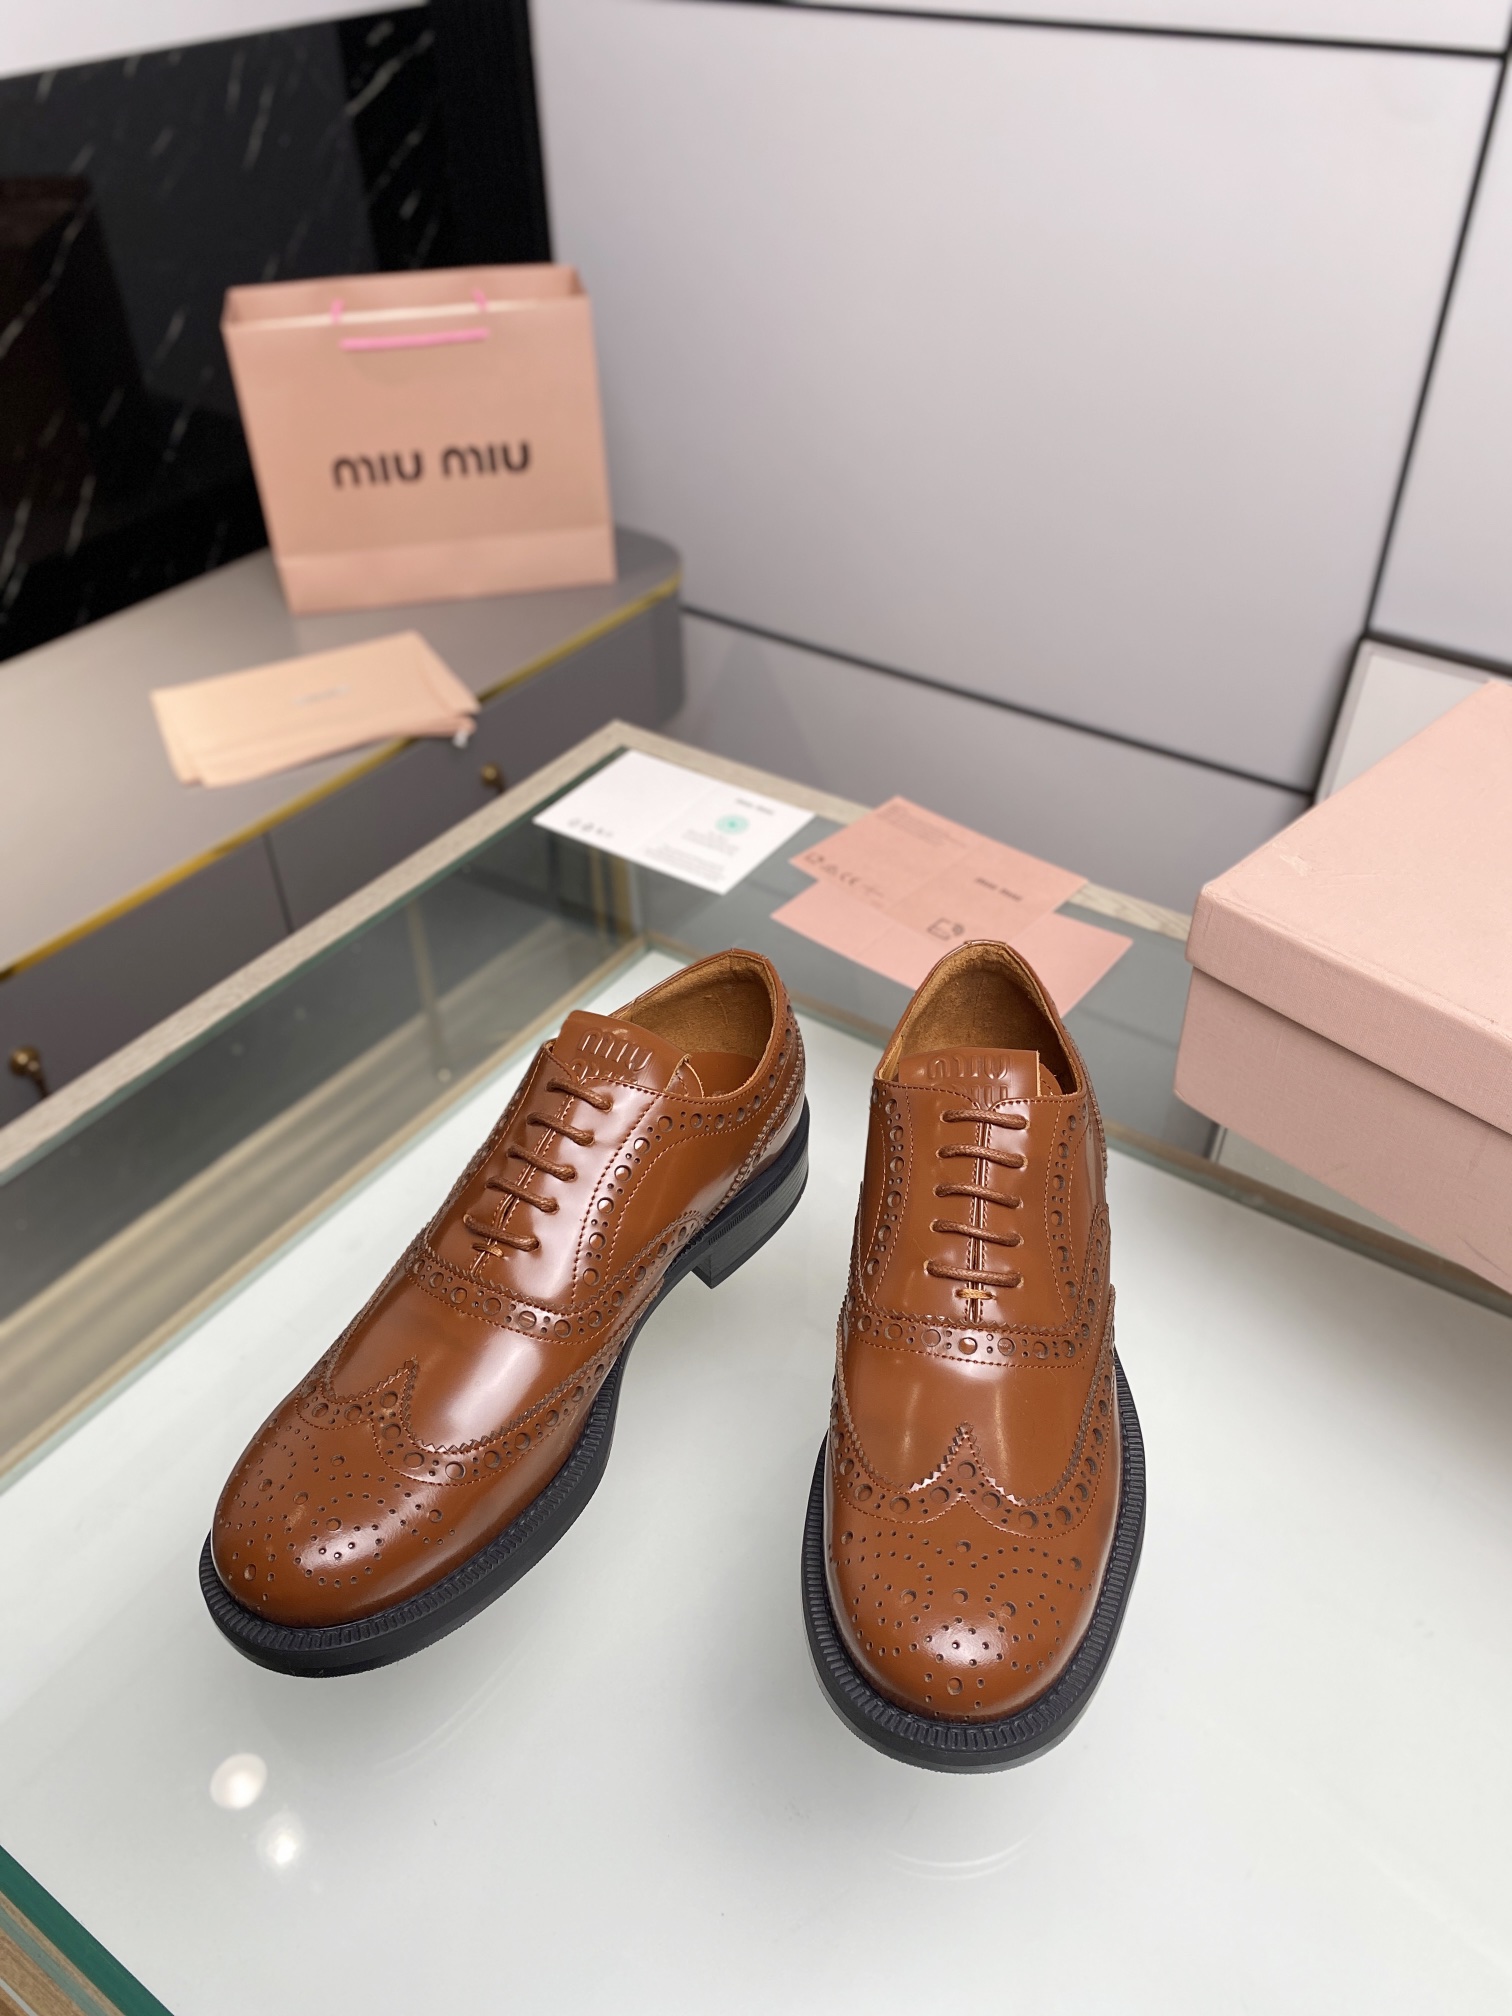 miumiu の スニーカーコピー 本革 ビジネス 革靴 軽量 歩きやすい 紳士靴 通気 シューズ  人気 ブラウン_8